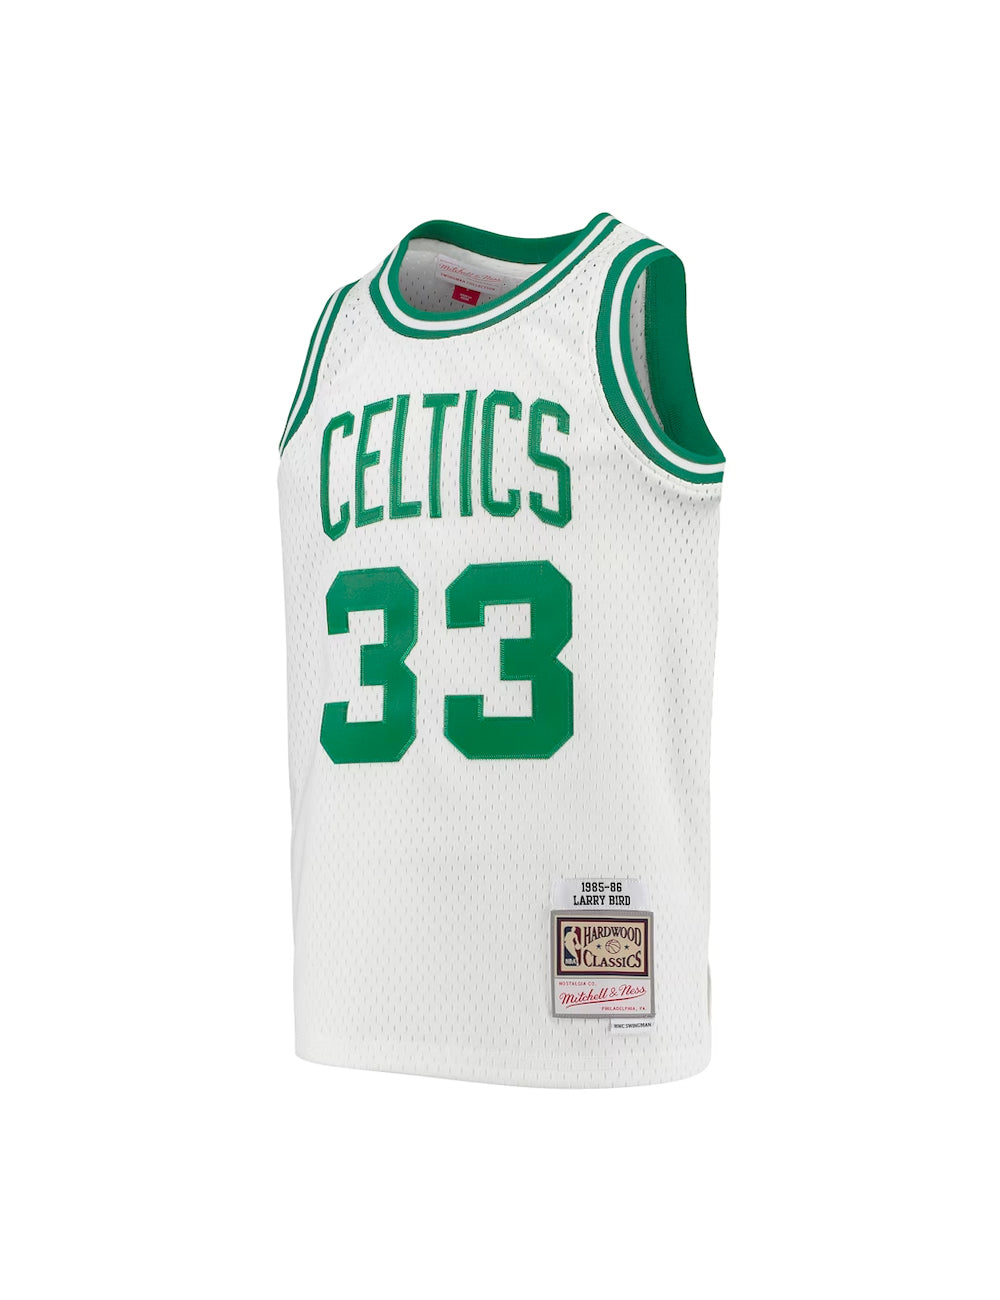  Larry Bird Boston Celtics 1985 Road Men's Swingman Jersey  (4X-Large) Green : Sports & Outdoors